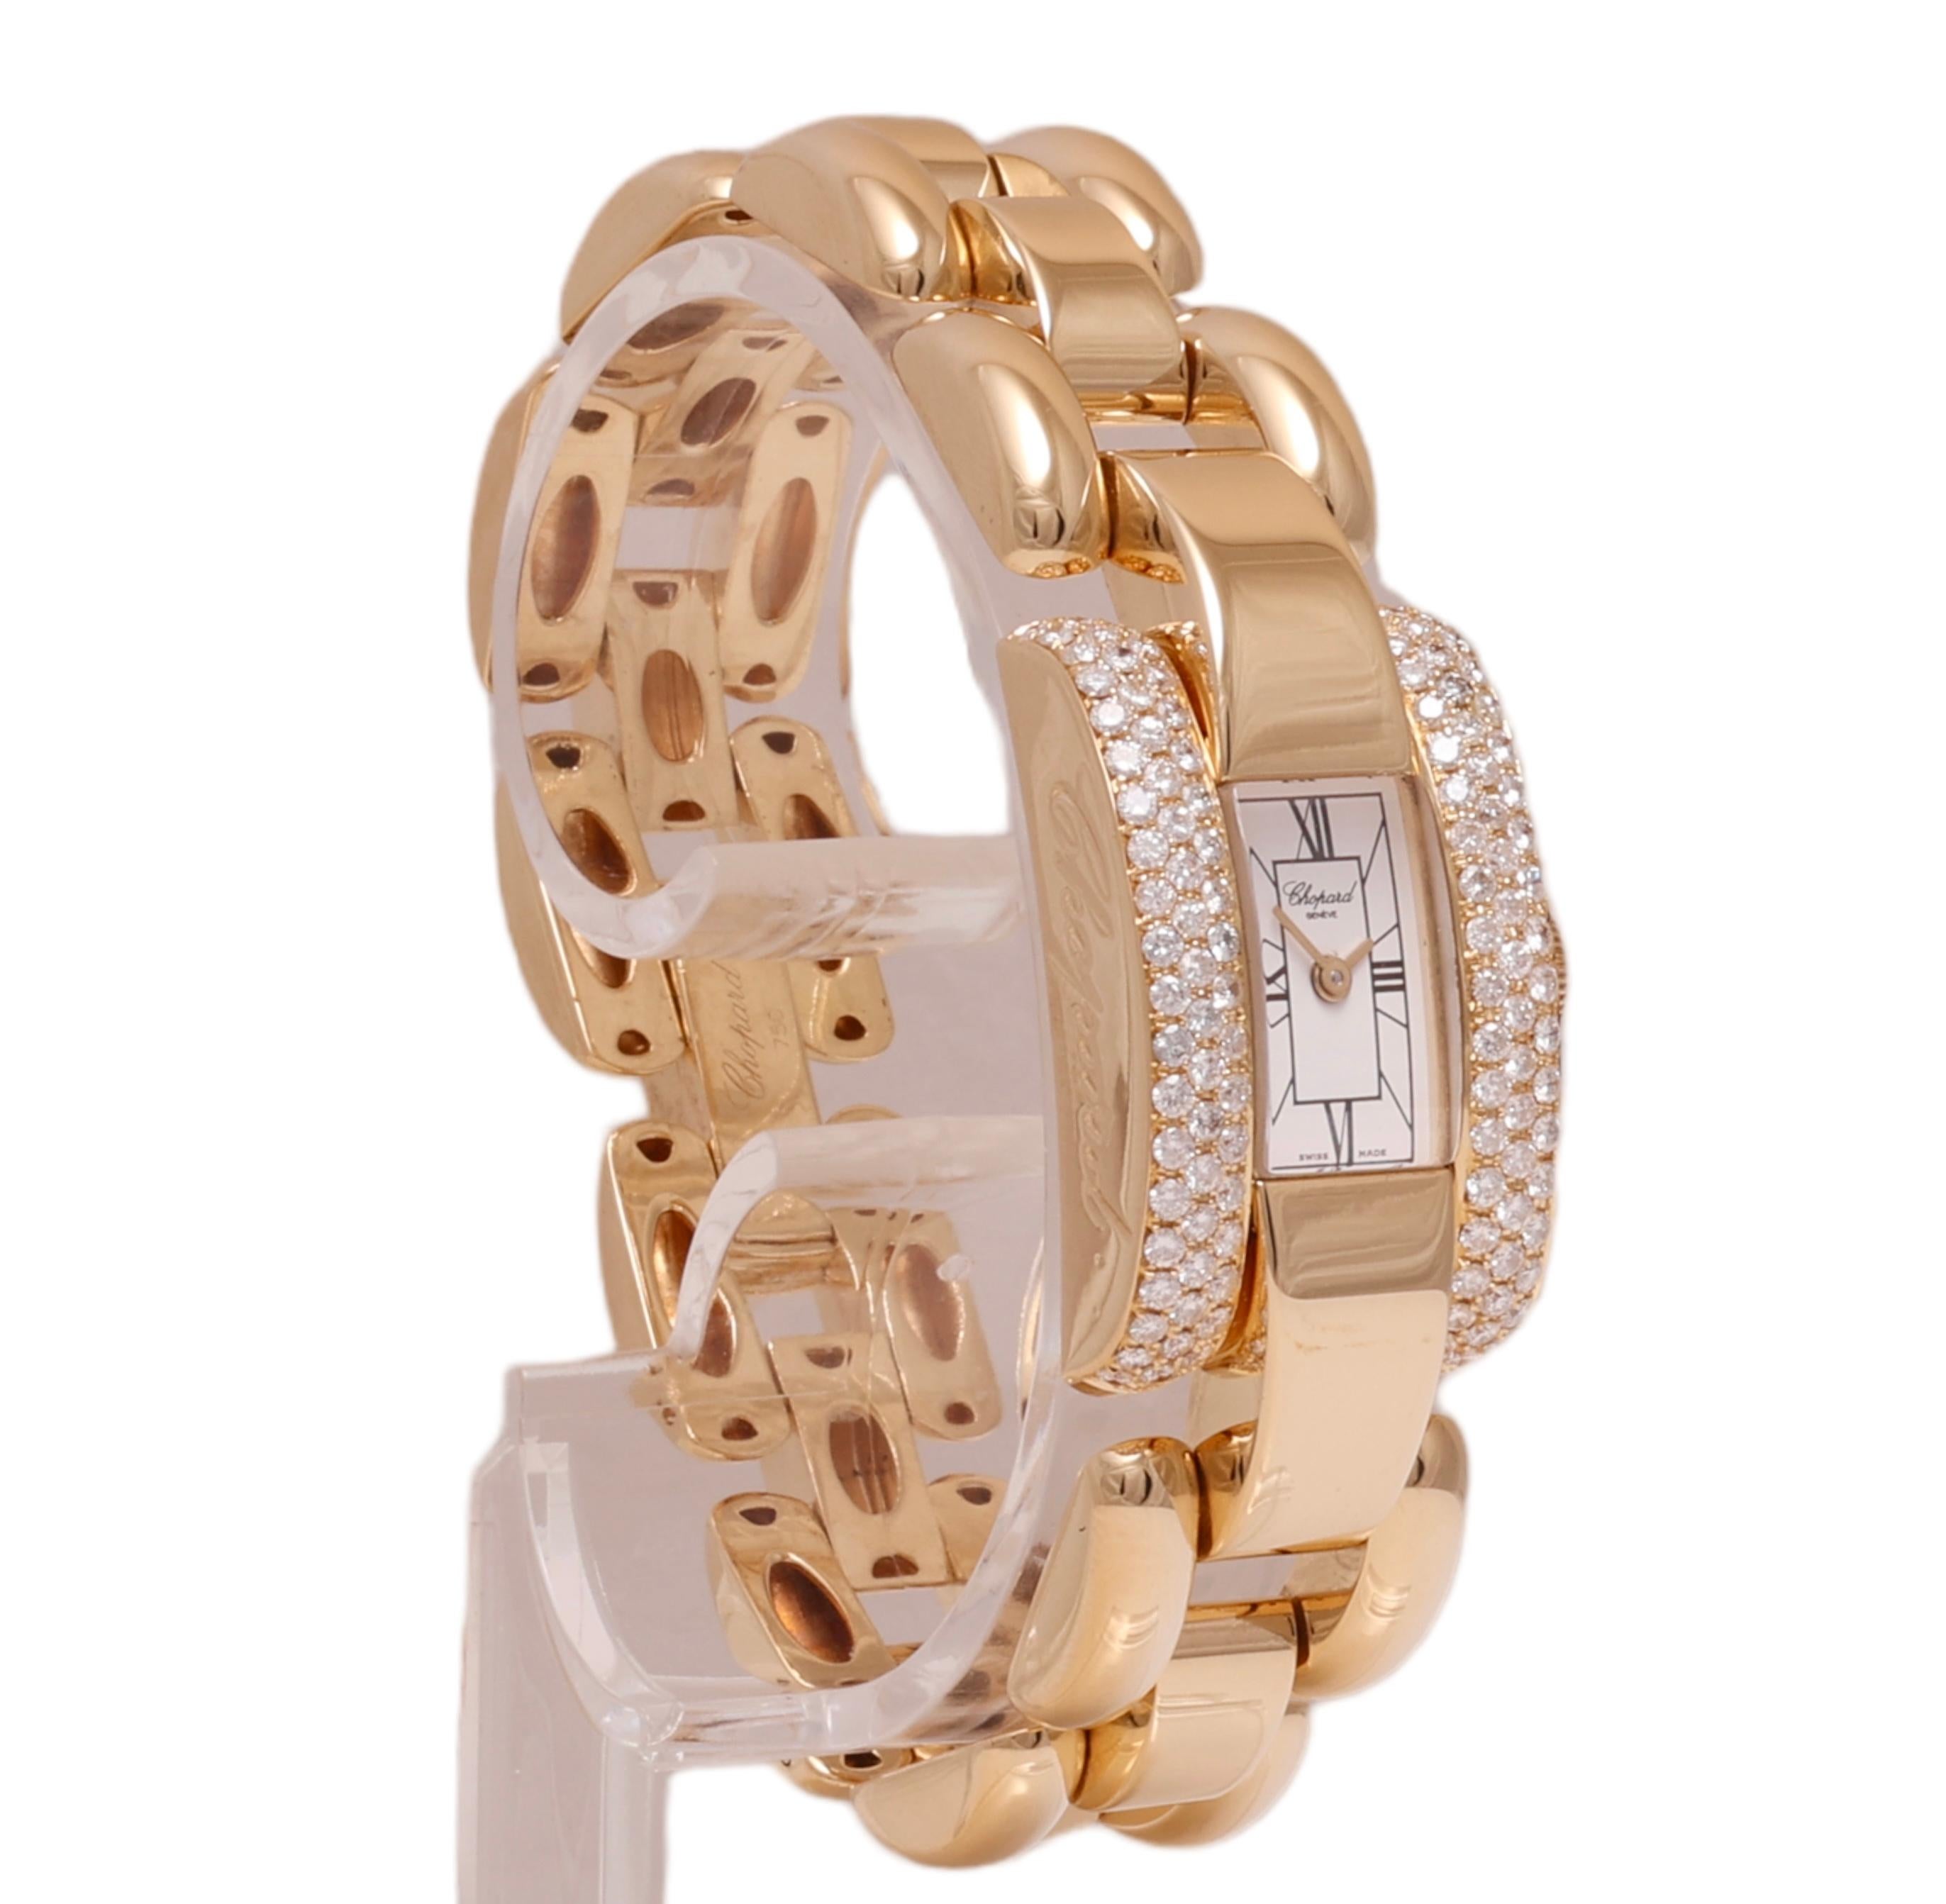 18 Kt. Gold & Diamonds Chopard La Strada Wrist Watch

Model: La Strada 

Ref number: 433 1

Movement: Quartz

Case: 18 kt. yellow gold case, measurements: 18 mm x 30 mm x 8.5 mm. With diamond bezel

Dial: White dial with Roman numerals 

Strap: 18